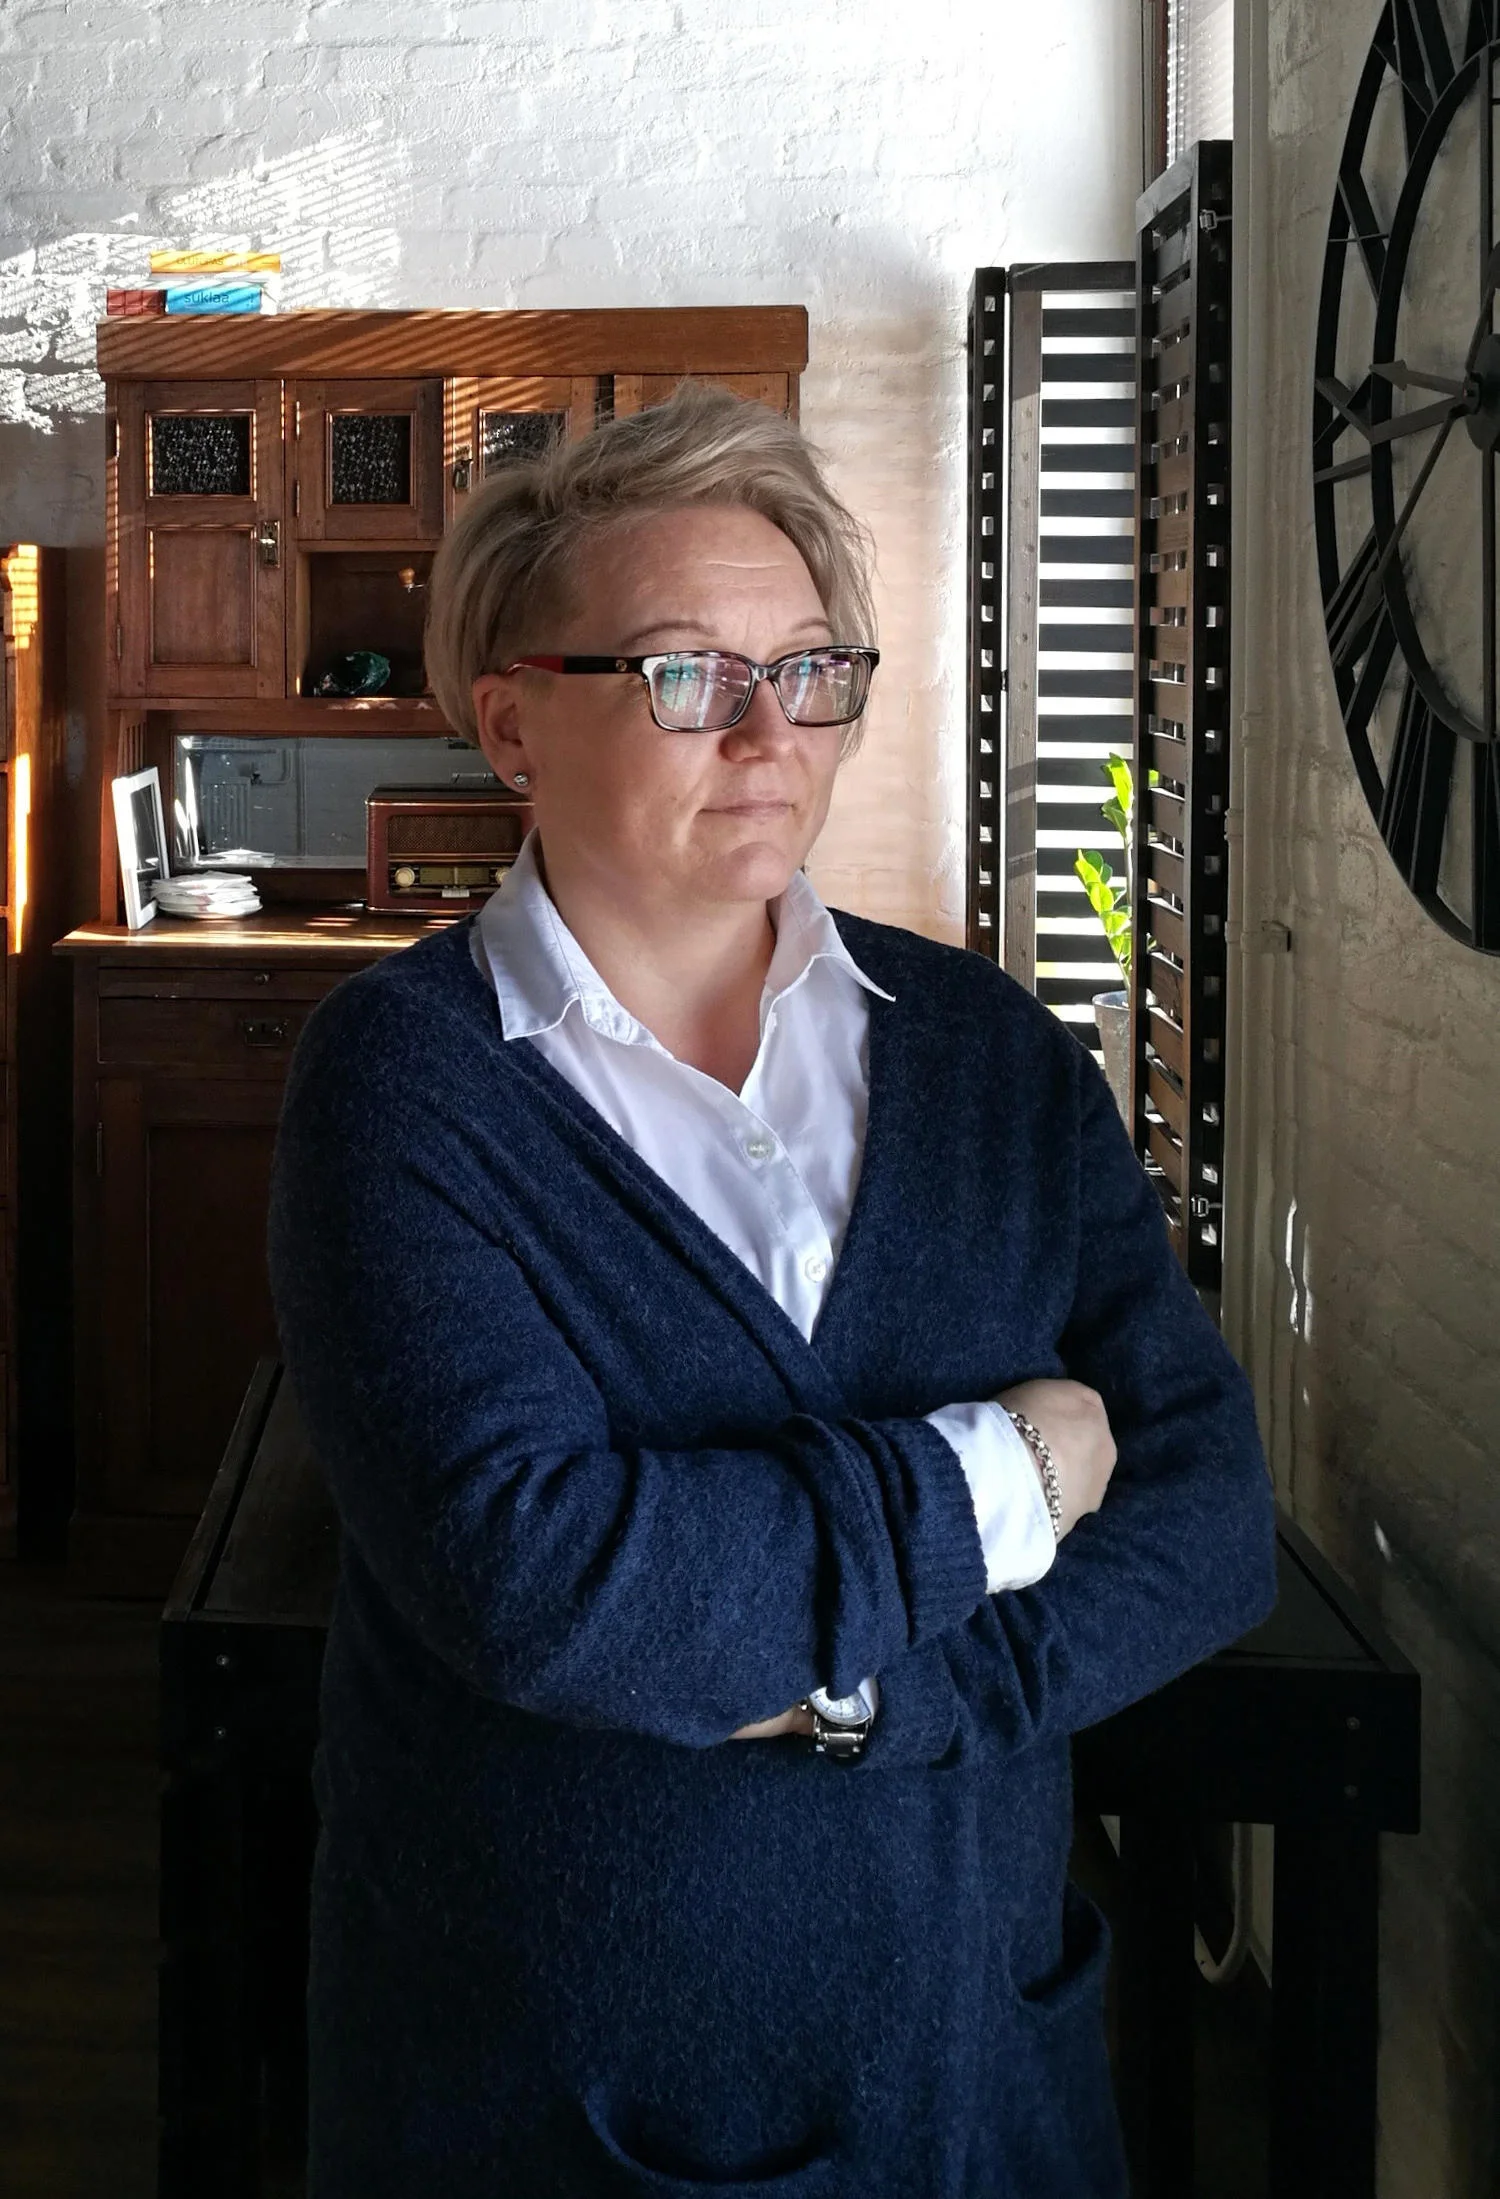 Introducing Sanna Könönen, the sales manager of Utran Uittotupa. (Photo is provided by Sanna.)